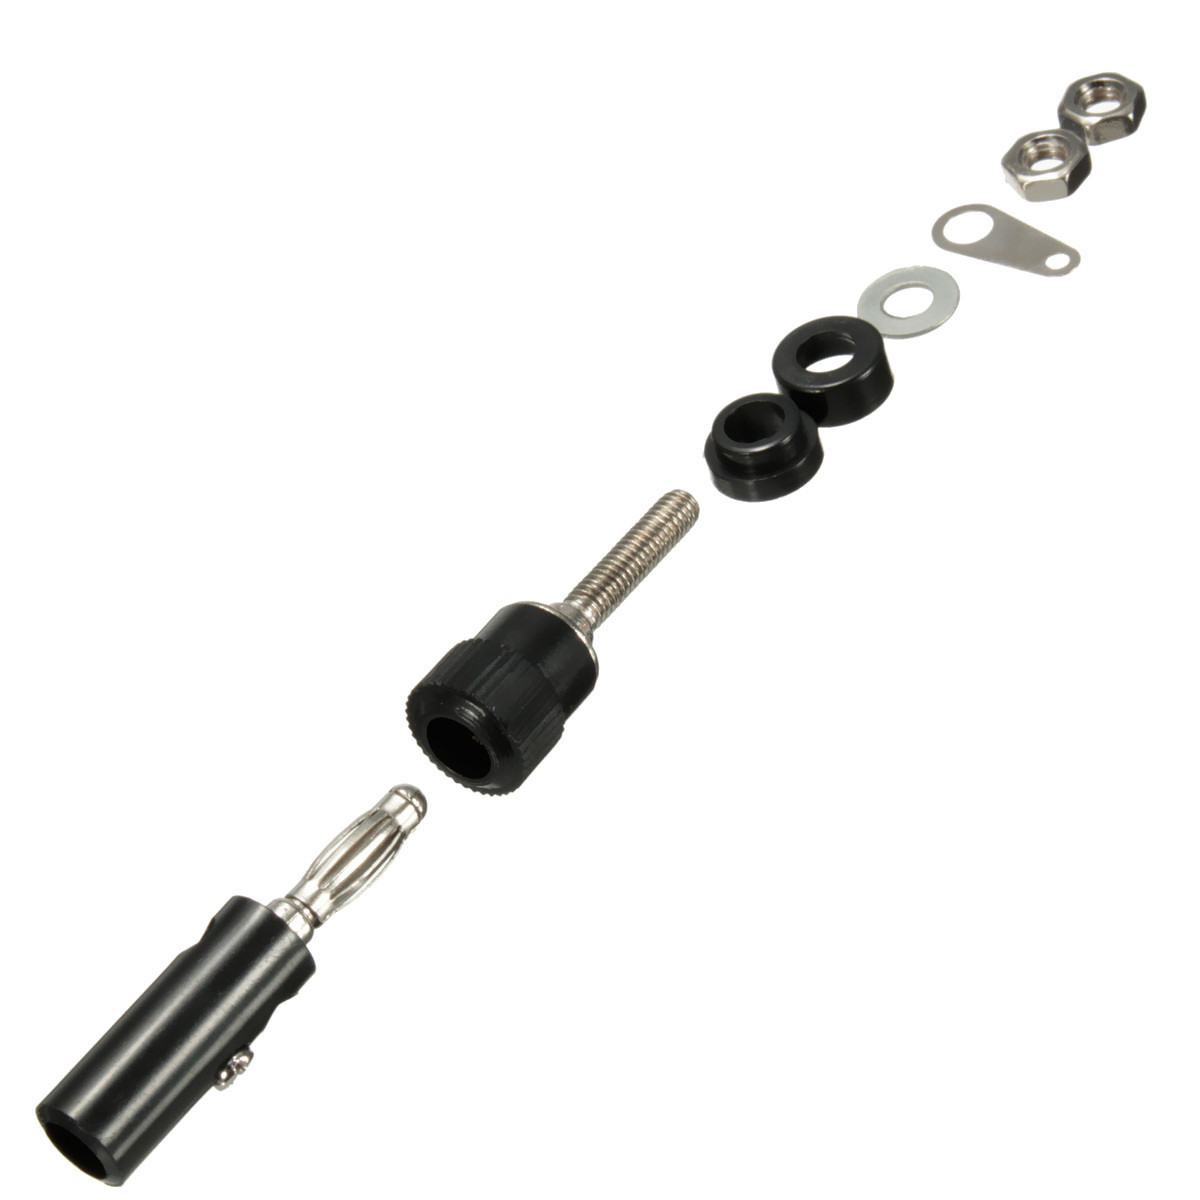 DANIU-50-Pairs-4mm-Terminal-Banana-Plug-Socket-Jack-Connectors-Instrument-Light-Tools-Black-and-Red-1358118-5